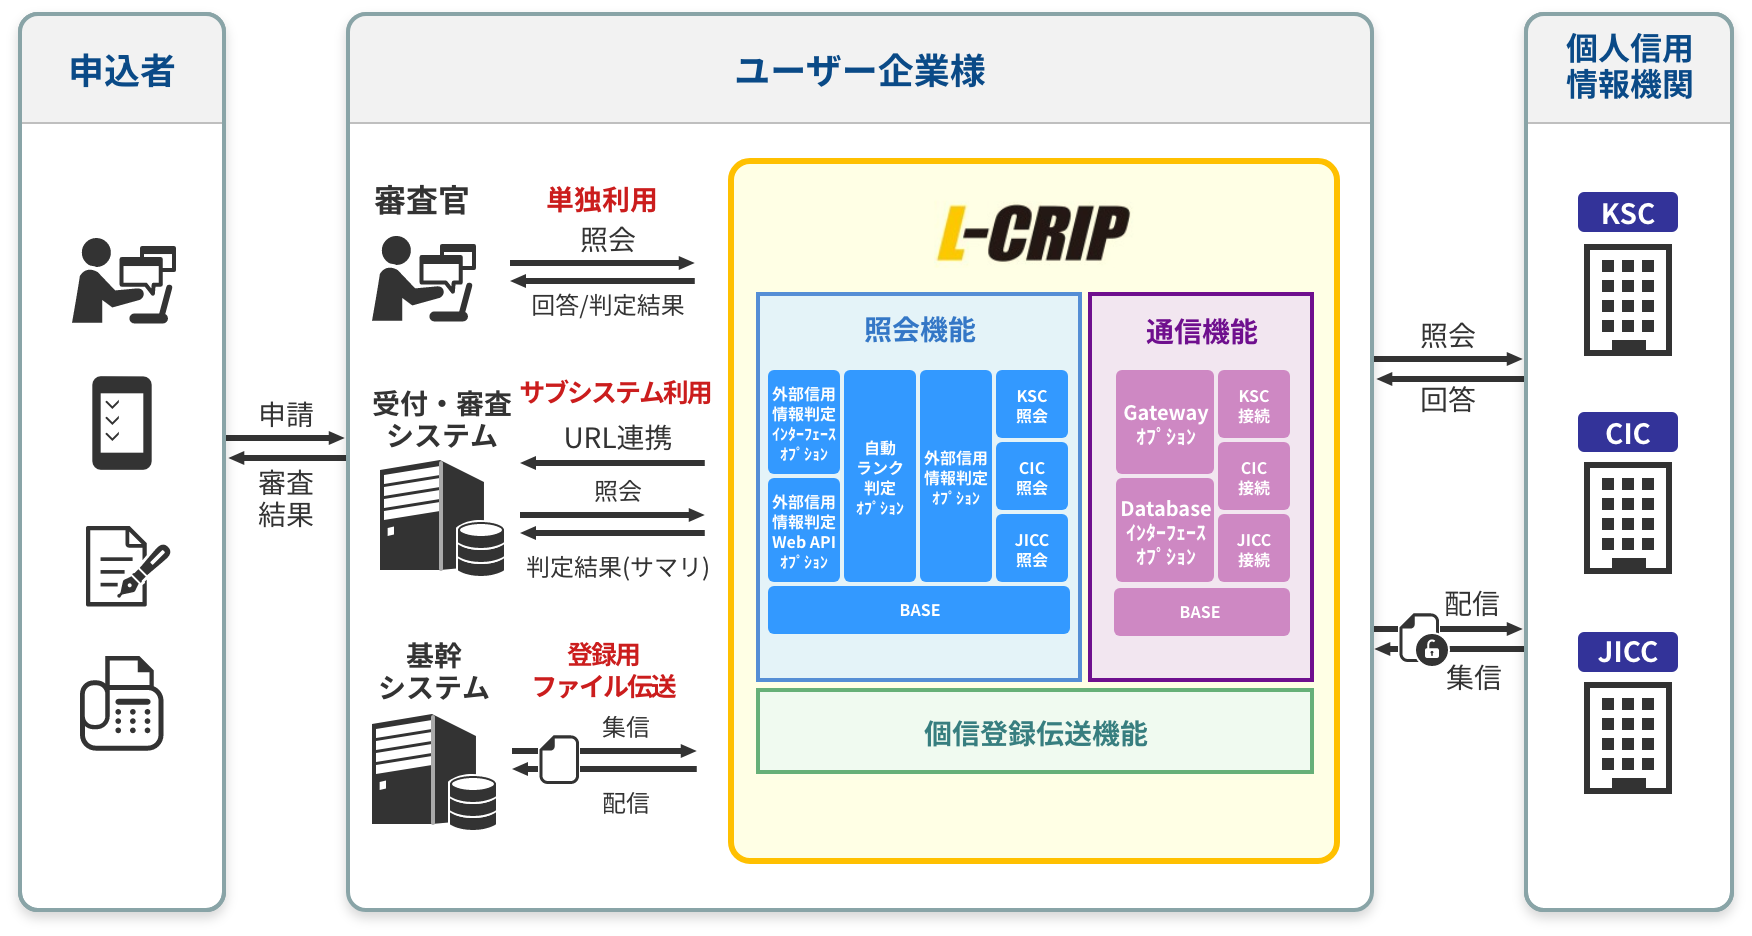 L-CRIP システム連携可能